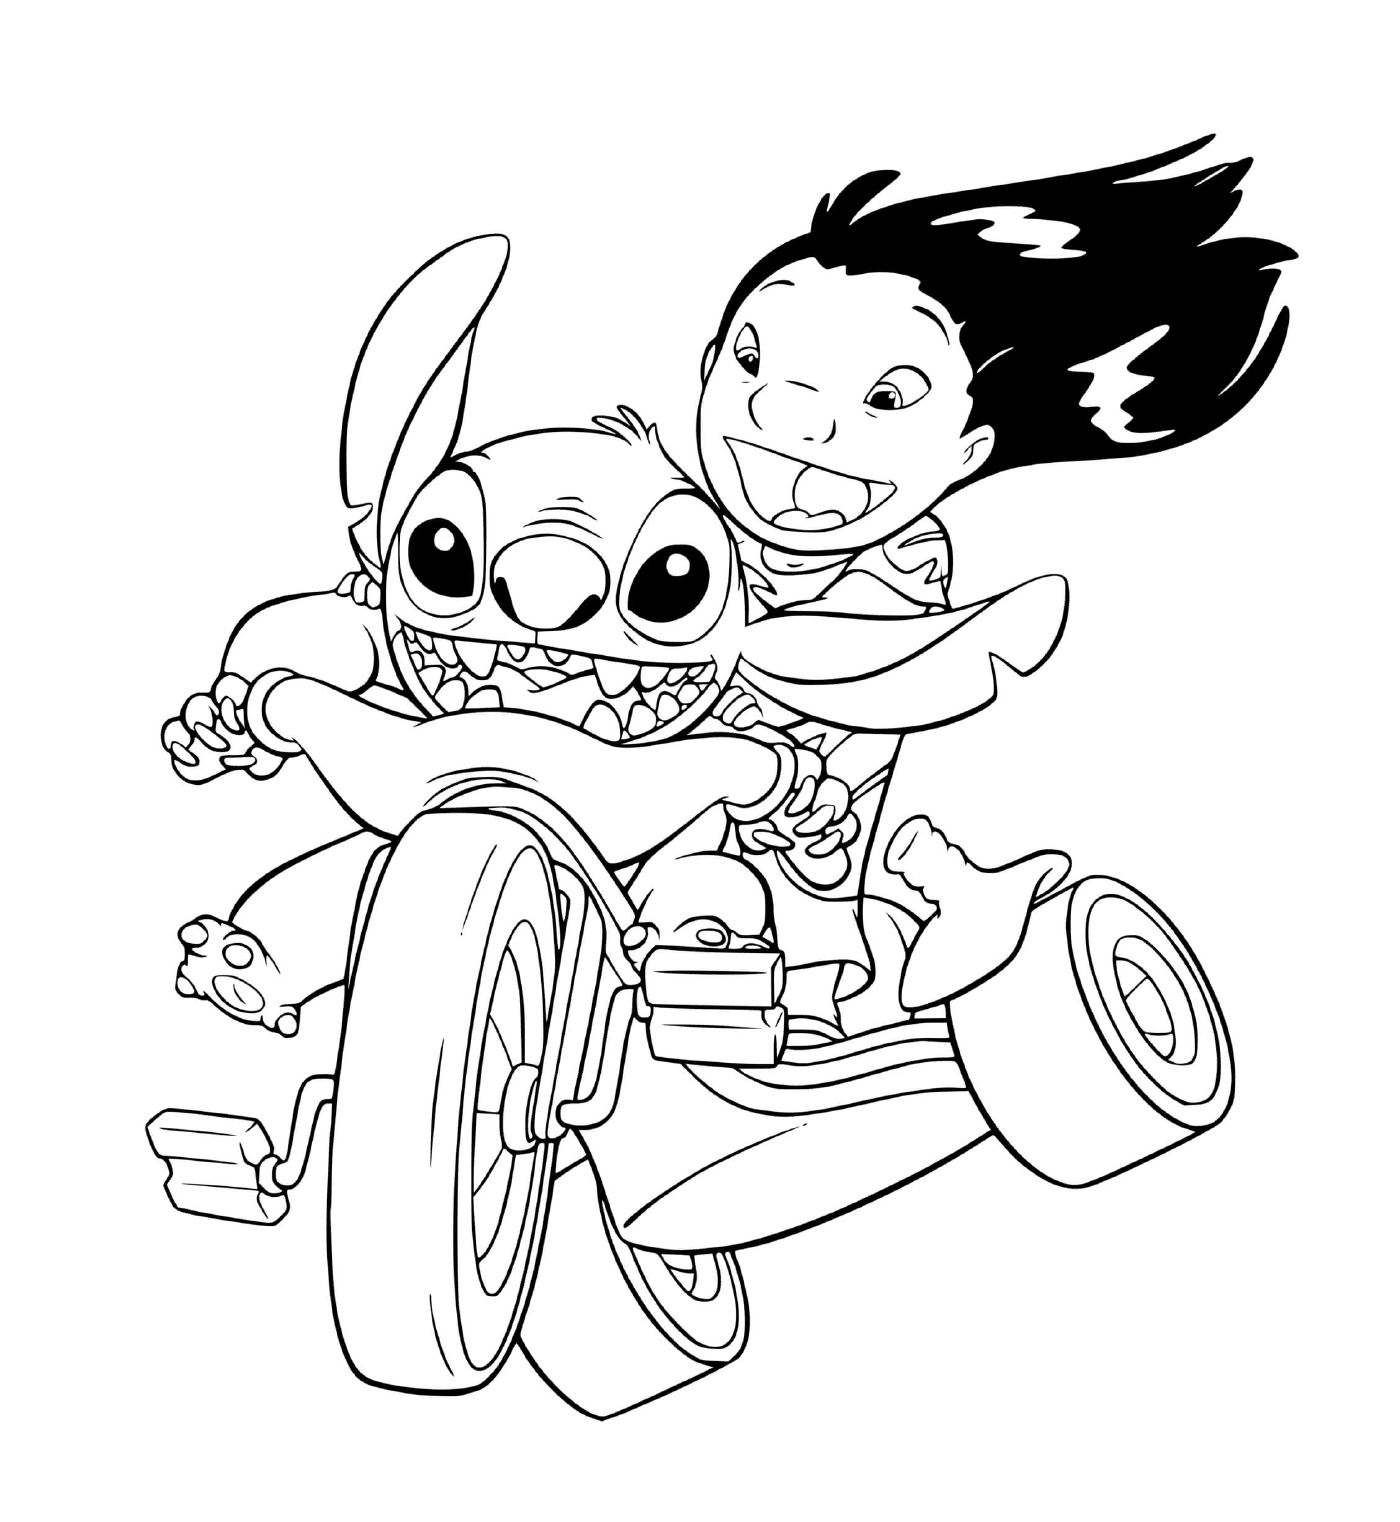  Stitch and Lilo love speed 